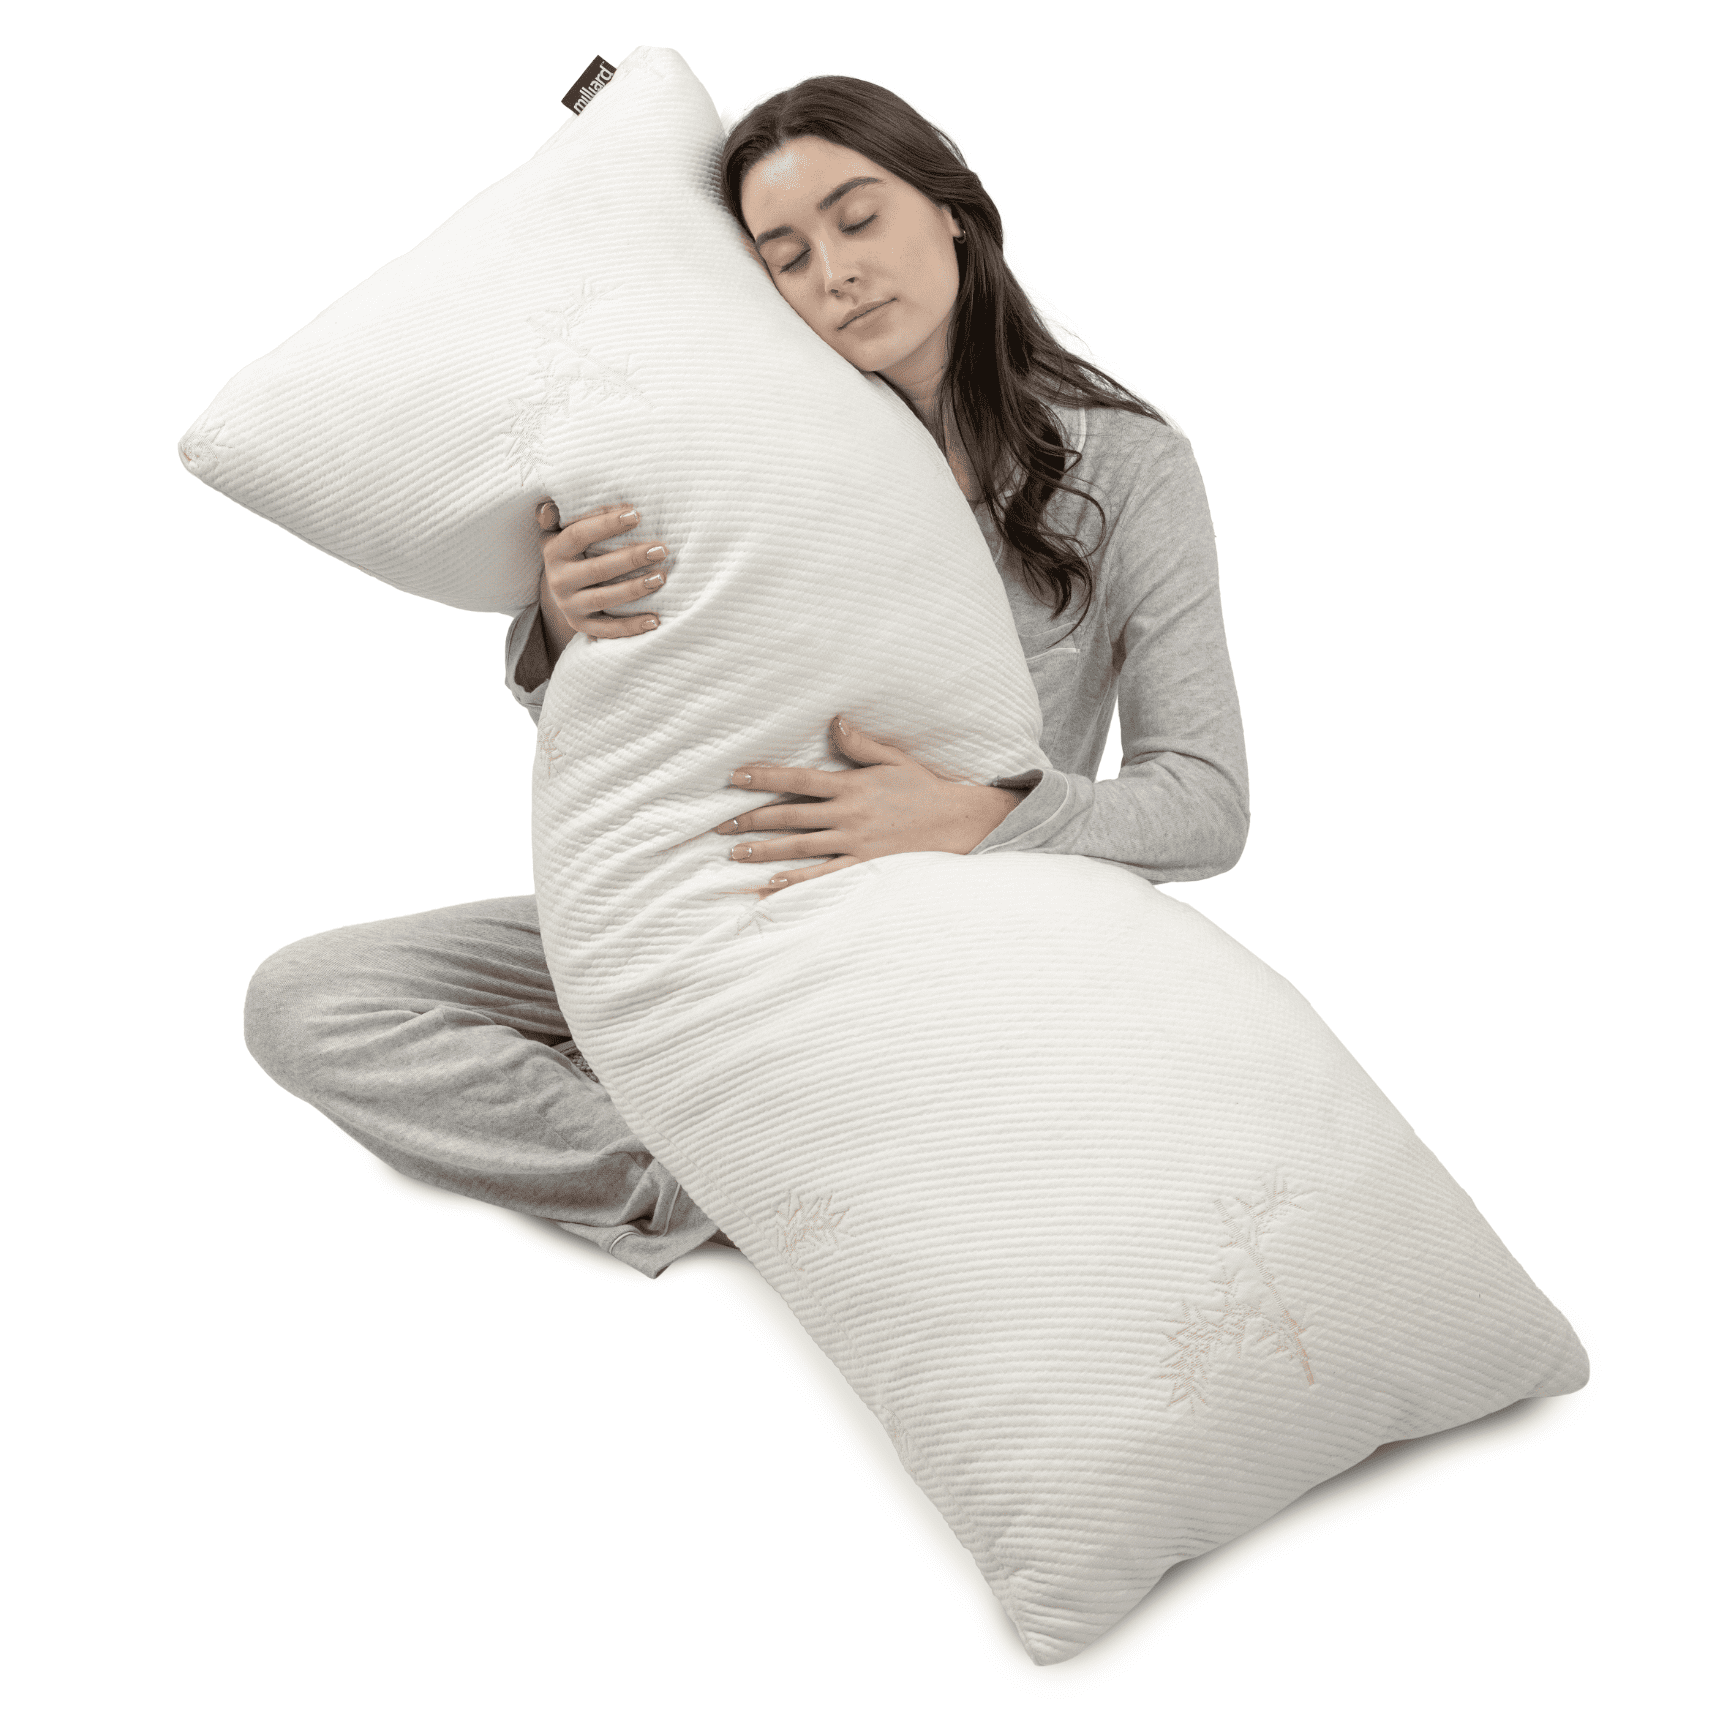  Milliard Pillow Inserts Shredded Memory Foam Cushion